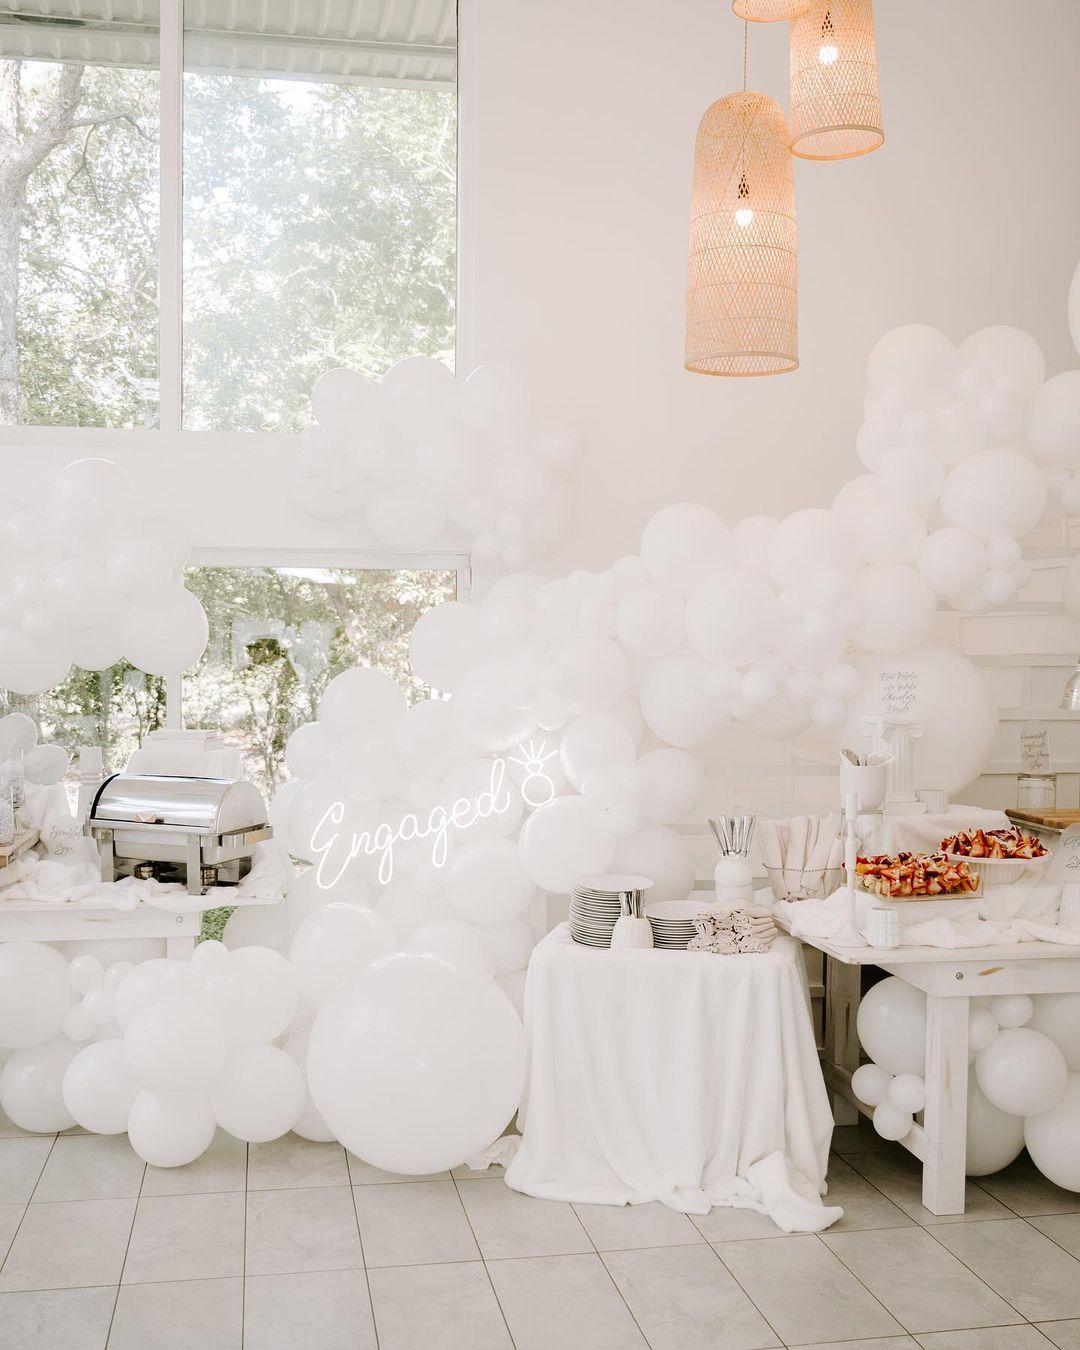 Simone Biles 'On Cloud 9' At Dream-Themed Bridal Shower 